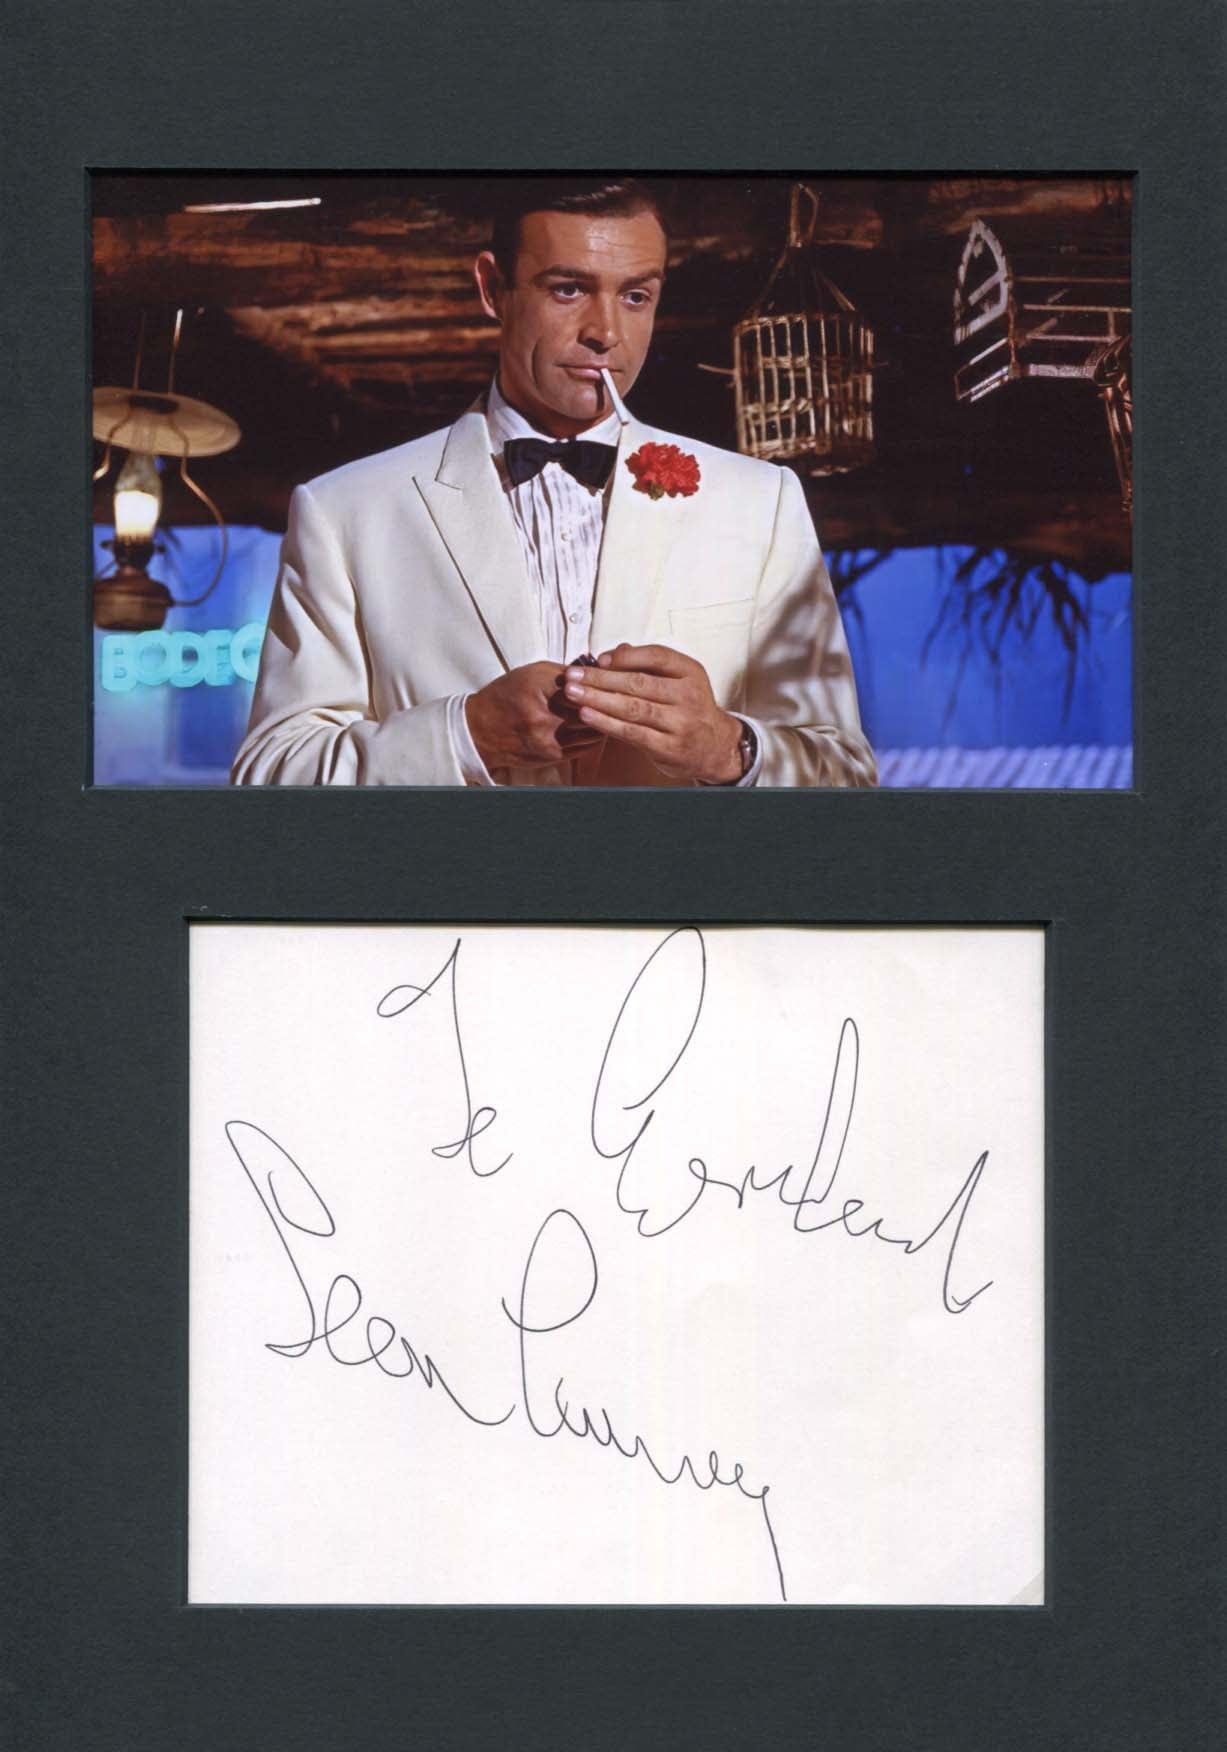 Sean Connery Autograph Autogramm | ID 8213718007957